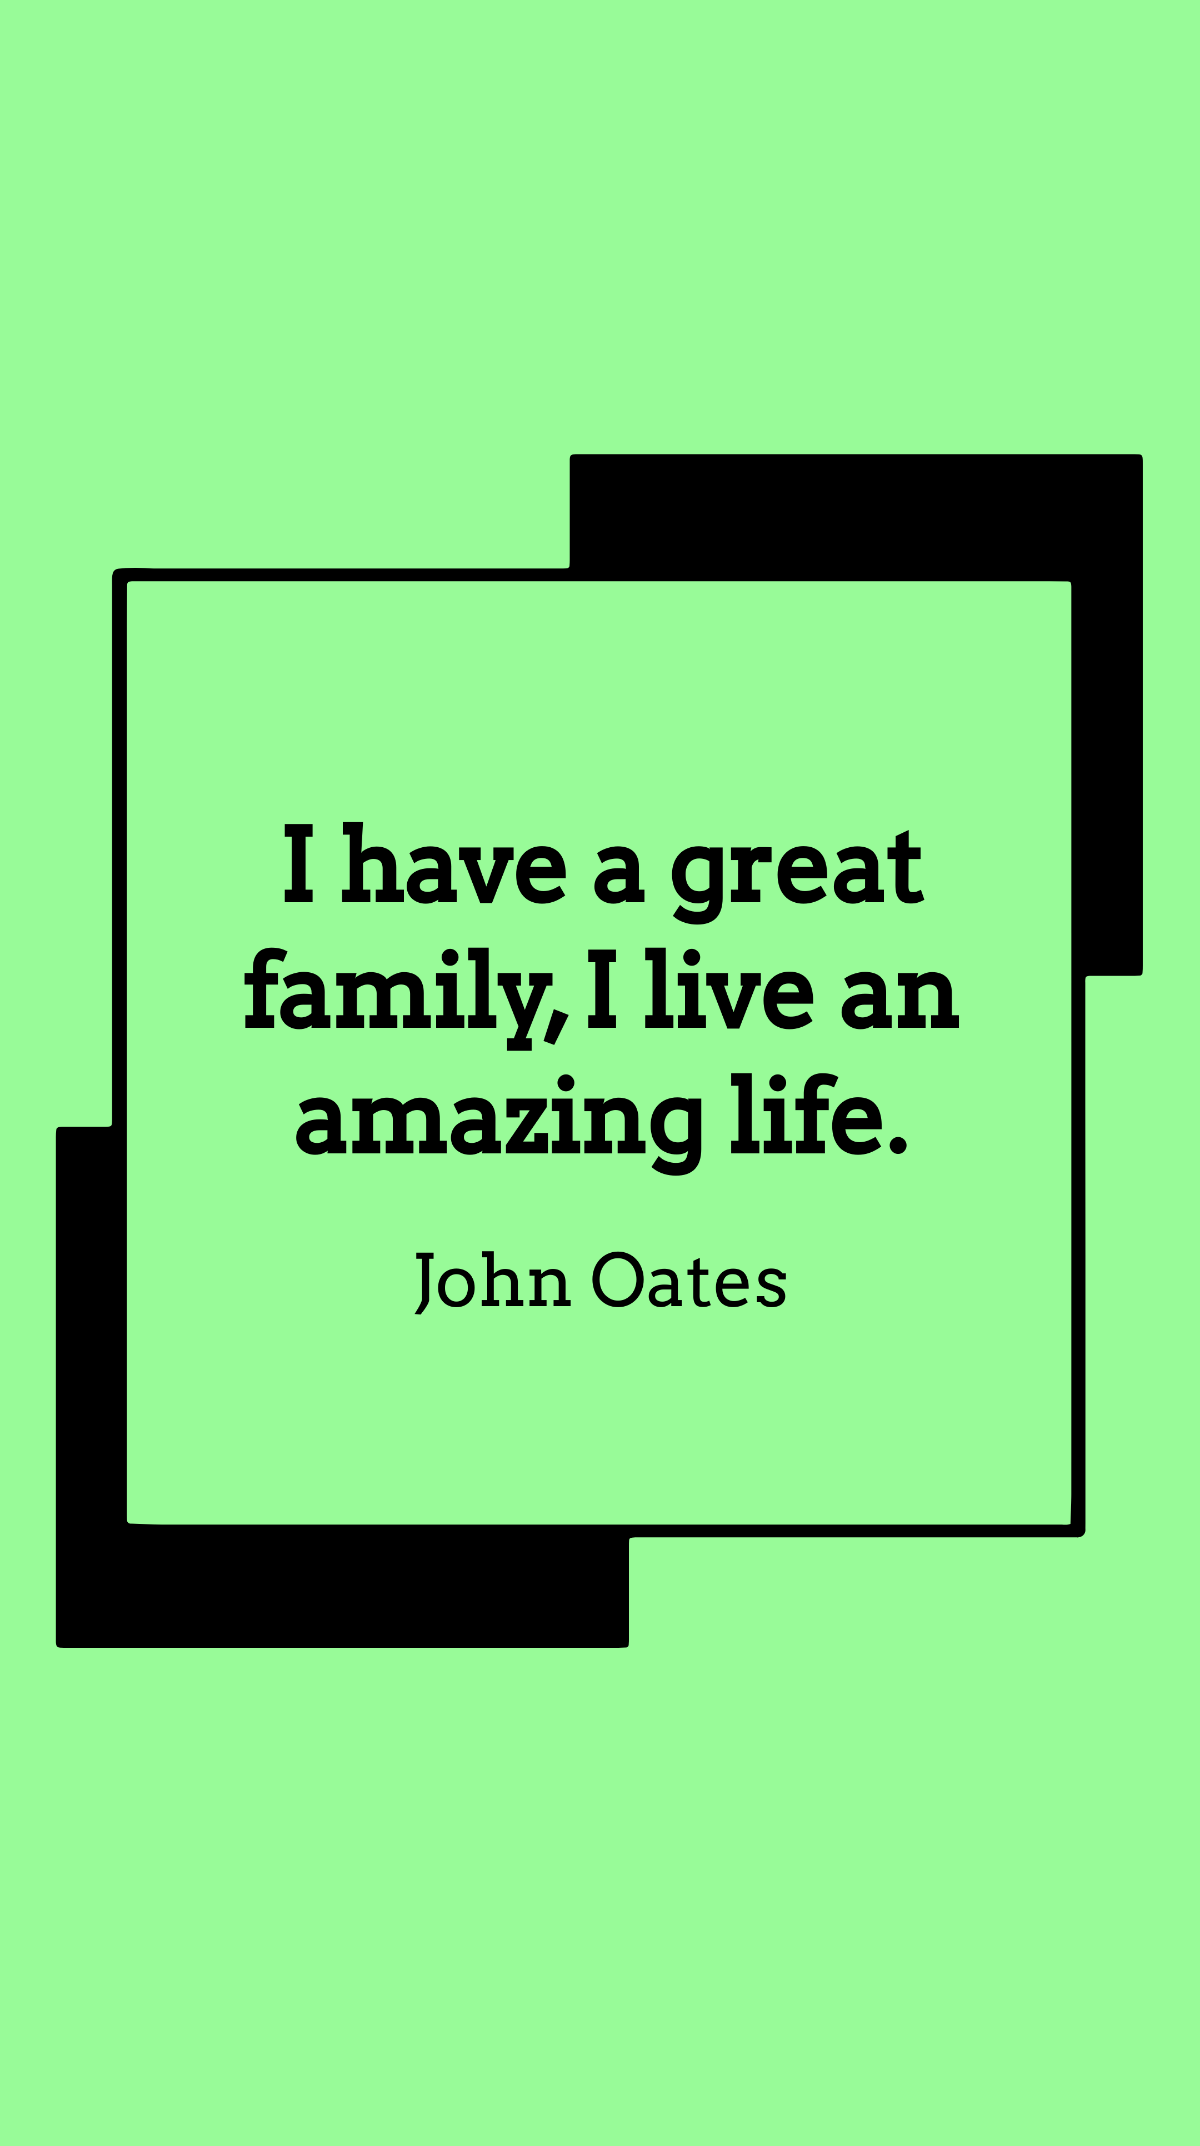 John Oates - I have a great family, I live an amazing life.